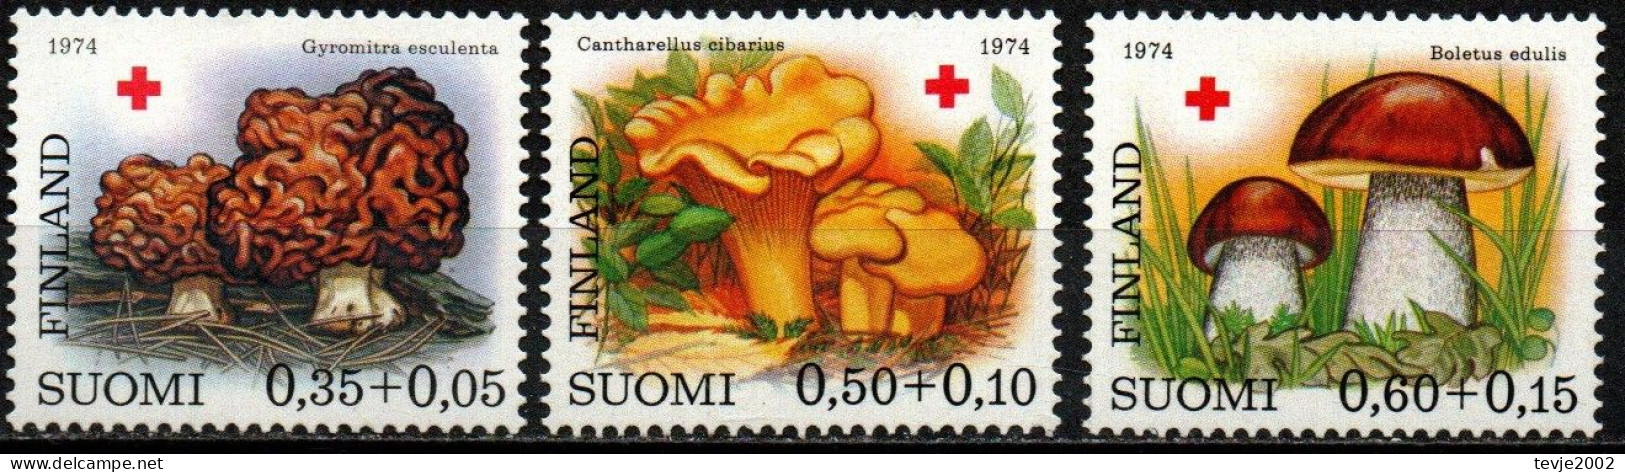 Finnland Suomi 1974 - Mi.Nr. 753 - 755 - Postfrisch MNH - Pilze Mushrooms - Mushrooms